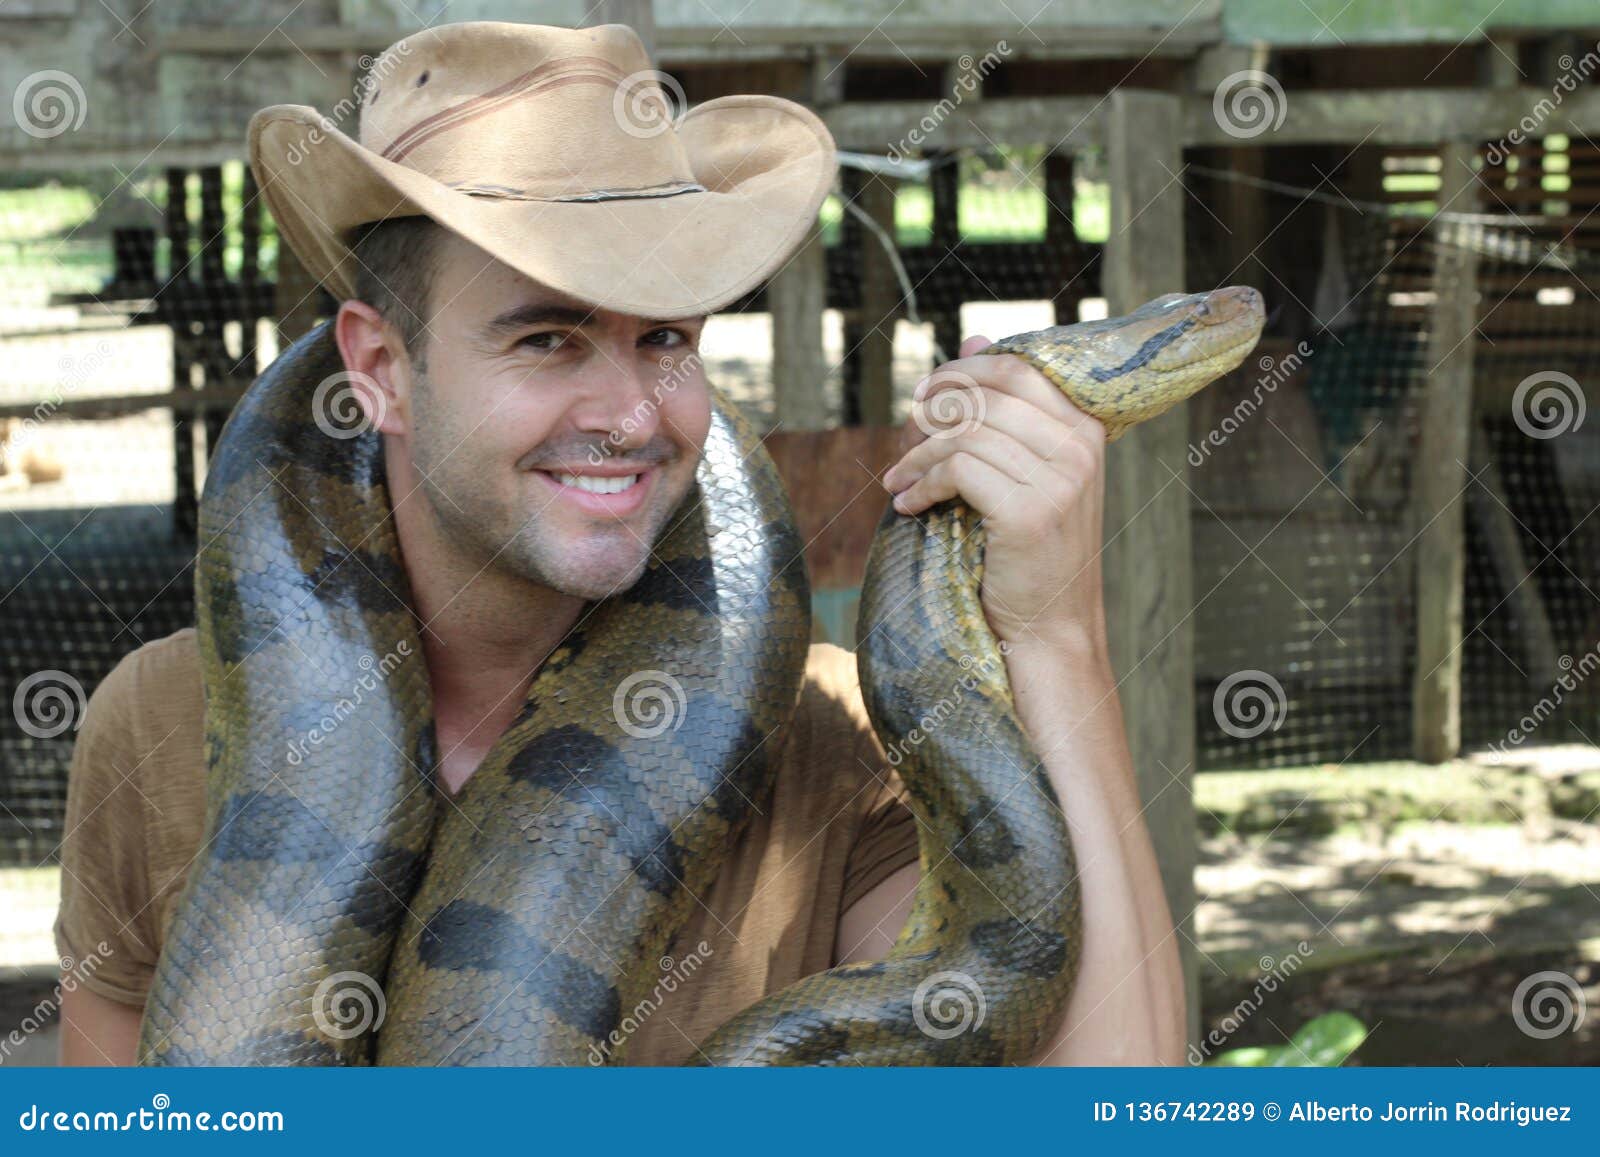 Man with a Giant Anaconda Around His Neck Stock Image - Image of